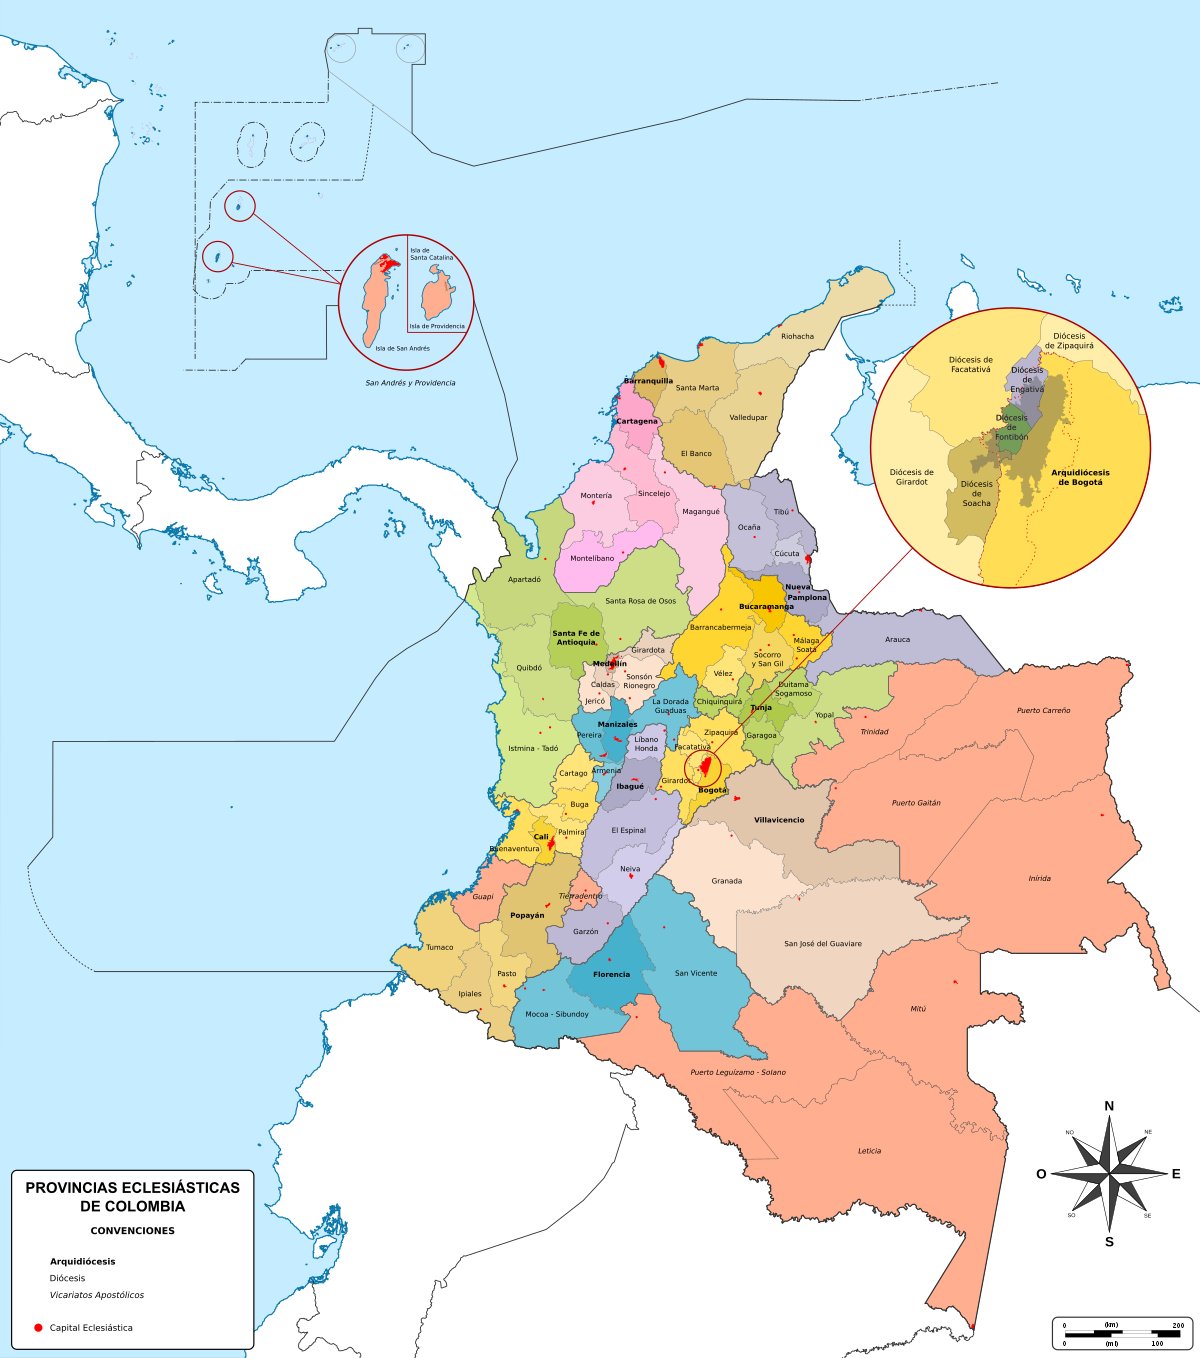 Iglesia católica en Colombia - Wikipedia, la enciclopedia libre